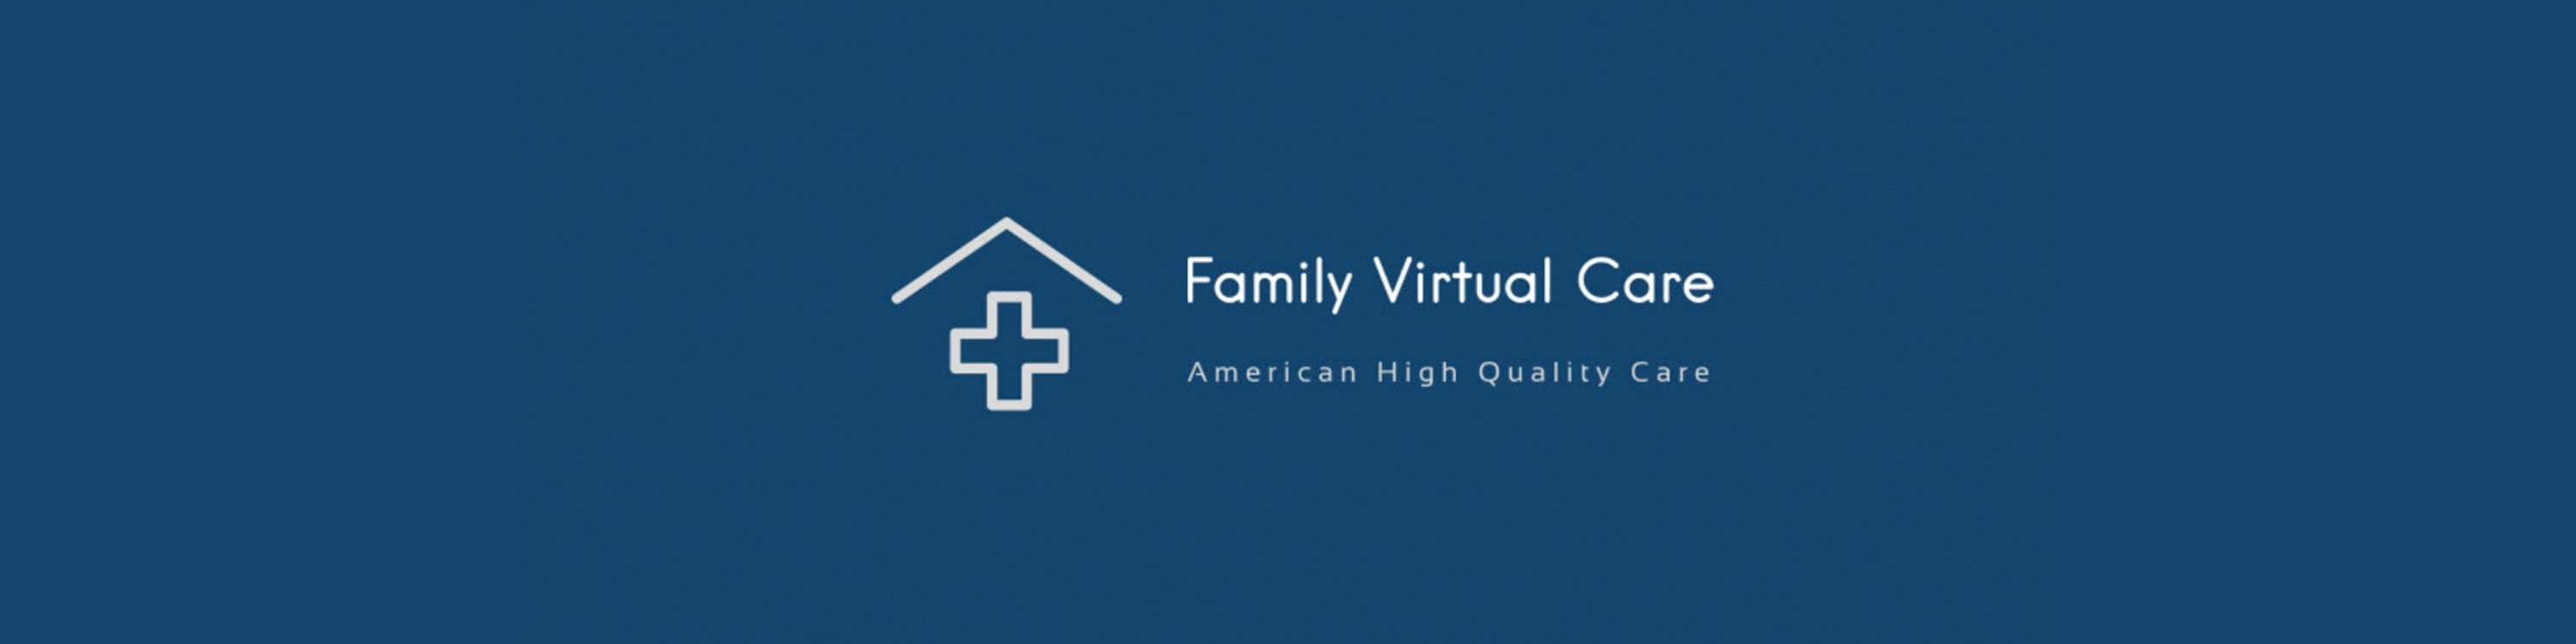 Family Virtual Care